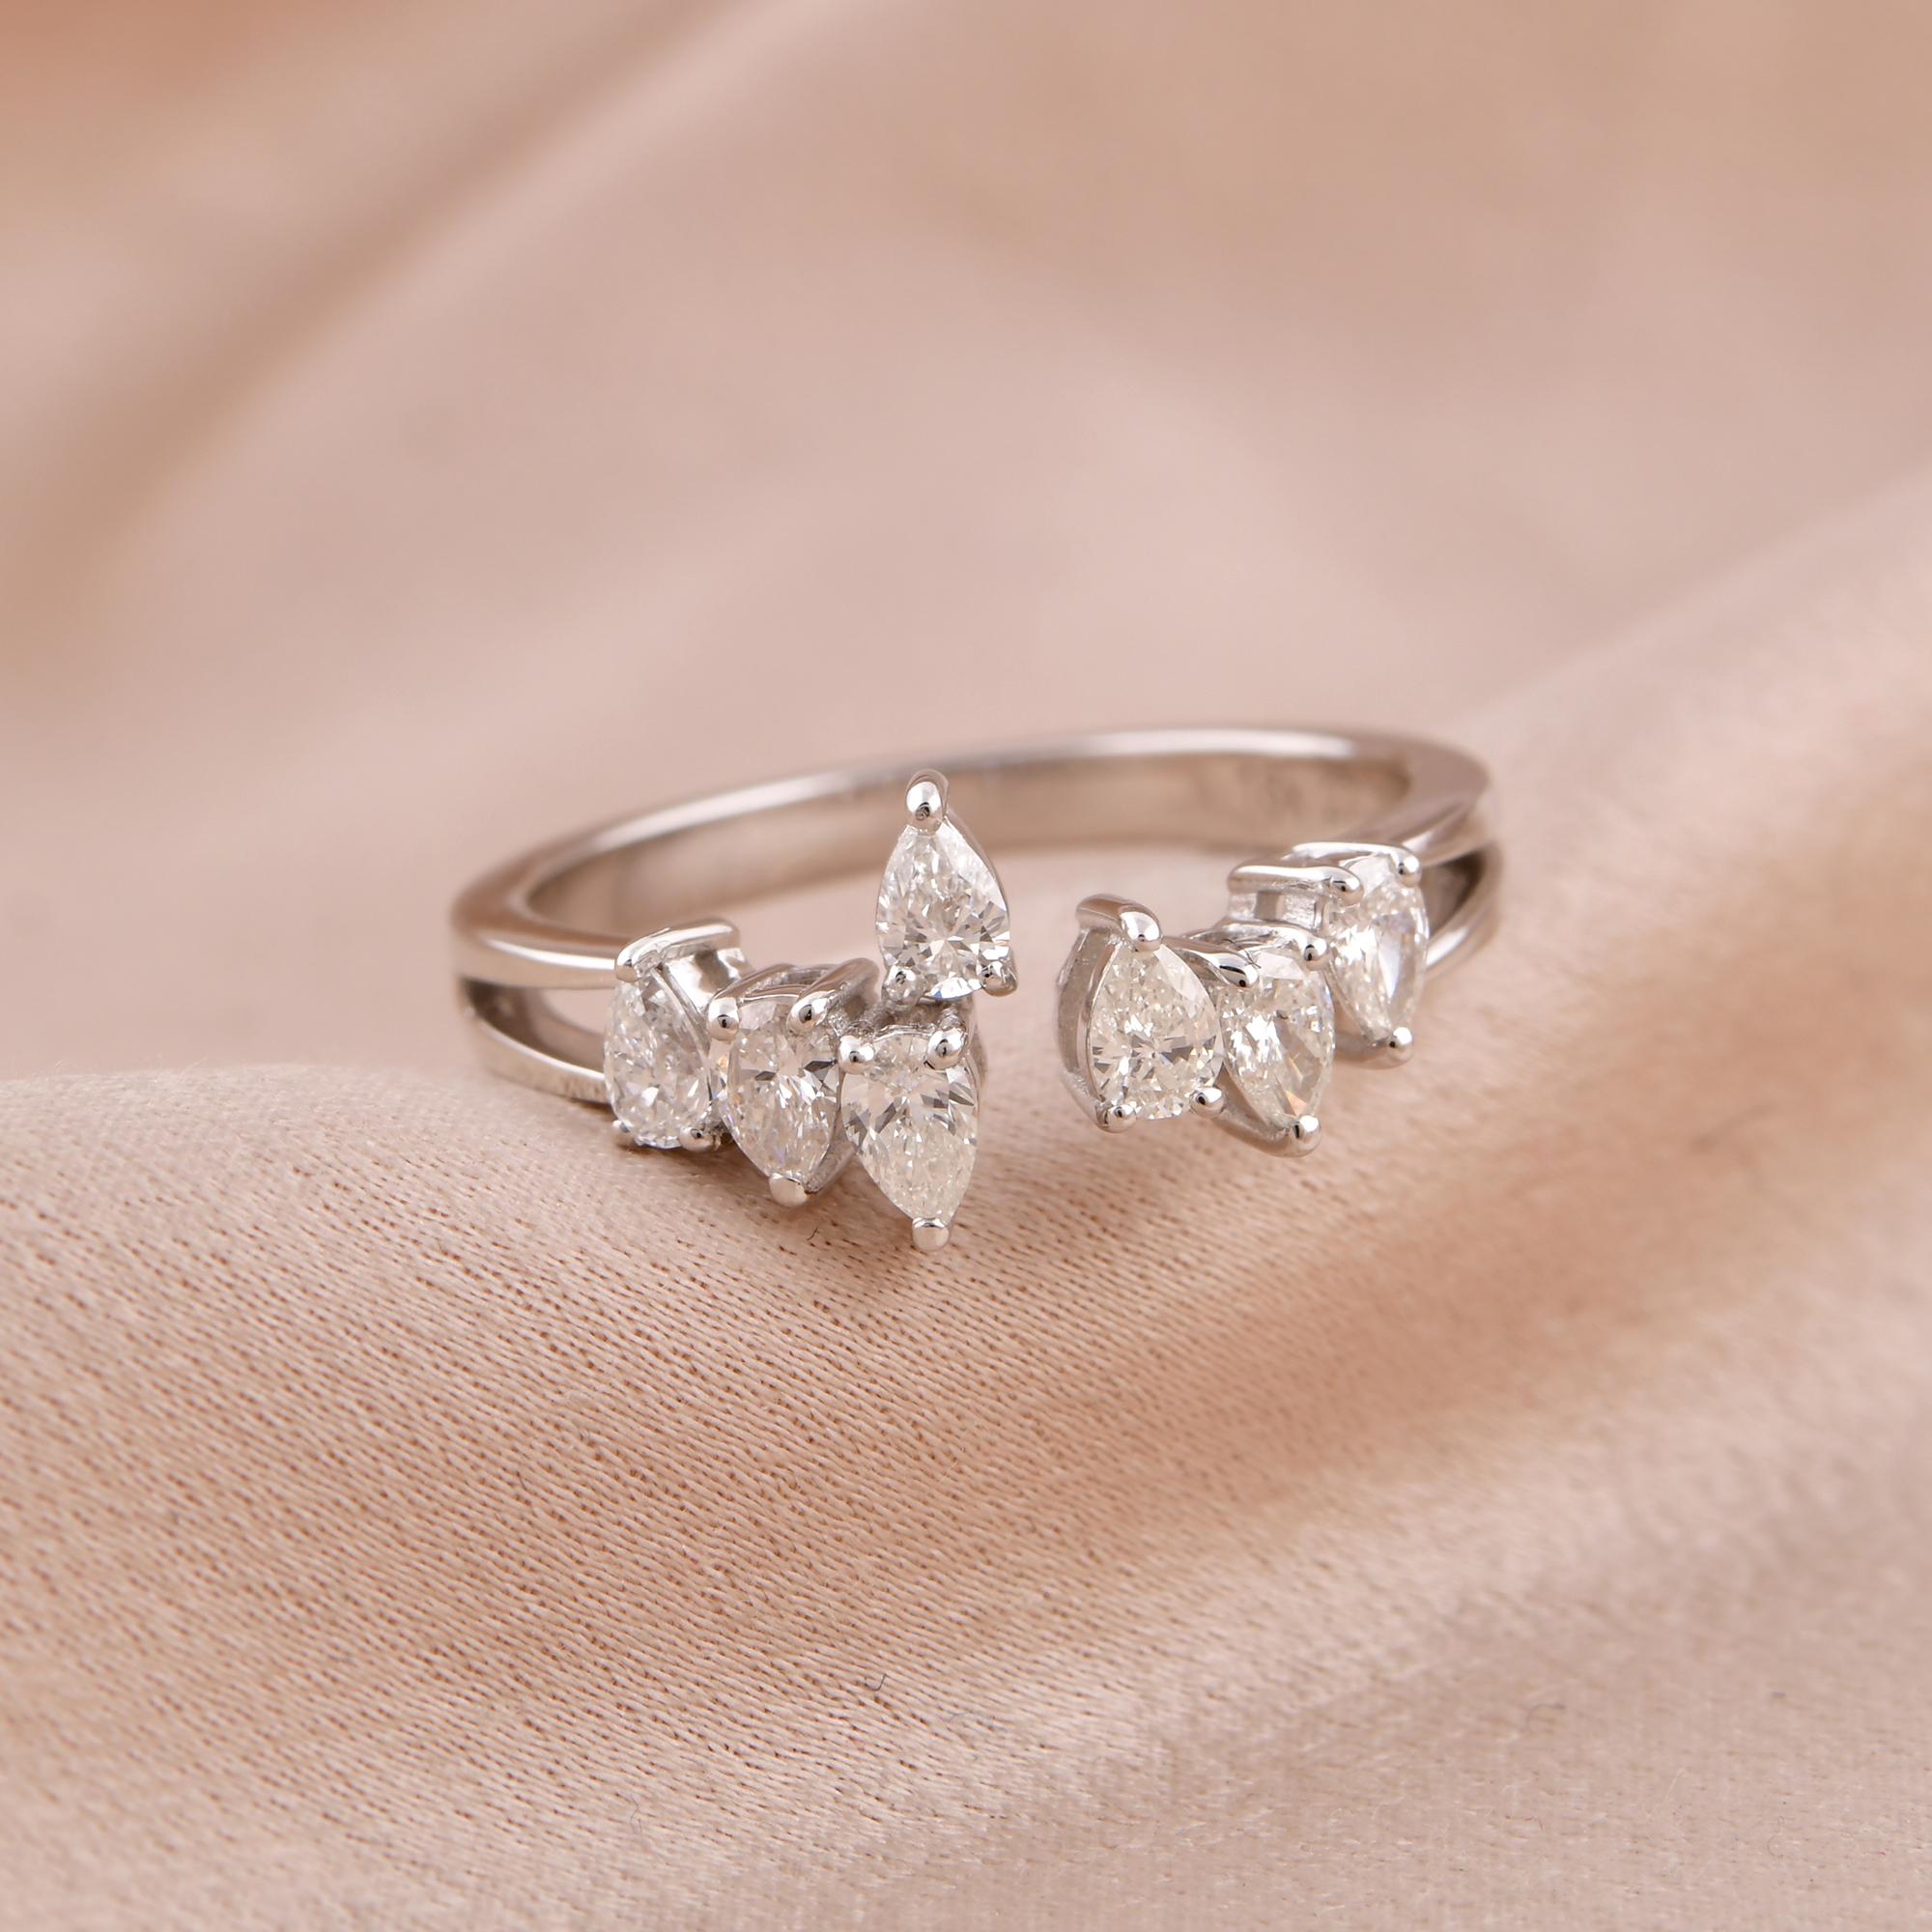 Women's 0.55 Carat Pear Diamond Promise Ring Solid 14 Karat White Gold Handmade Jewelry For Sale